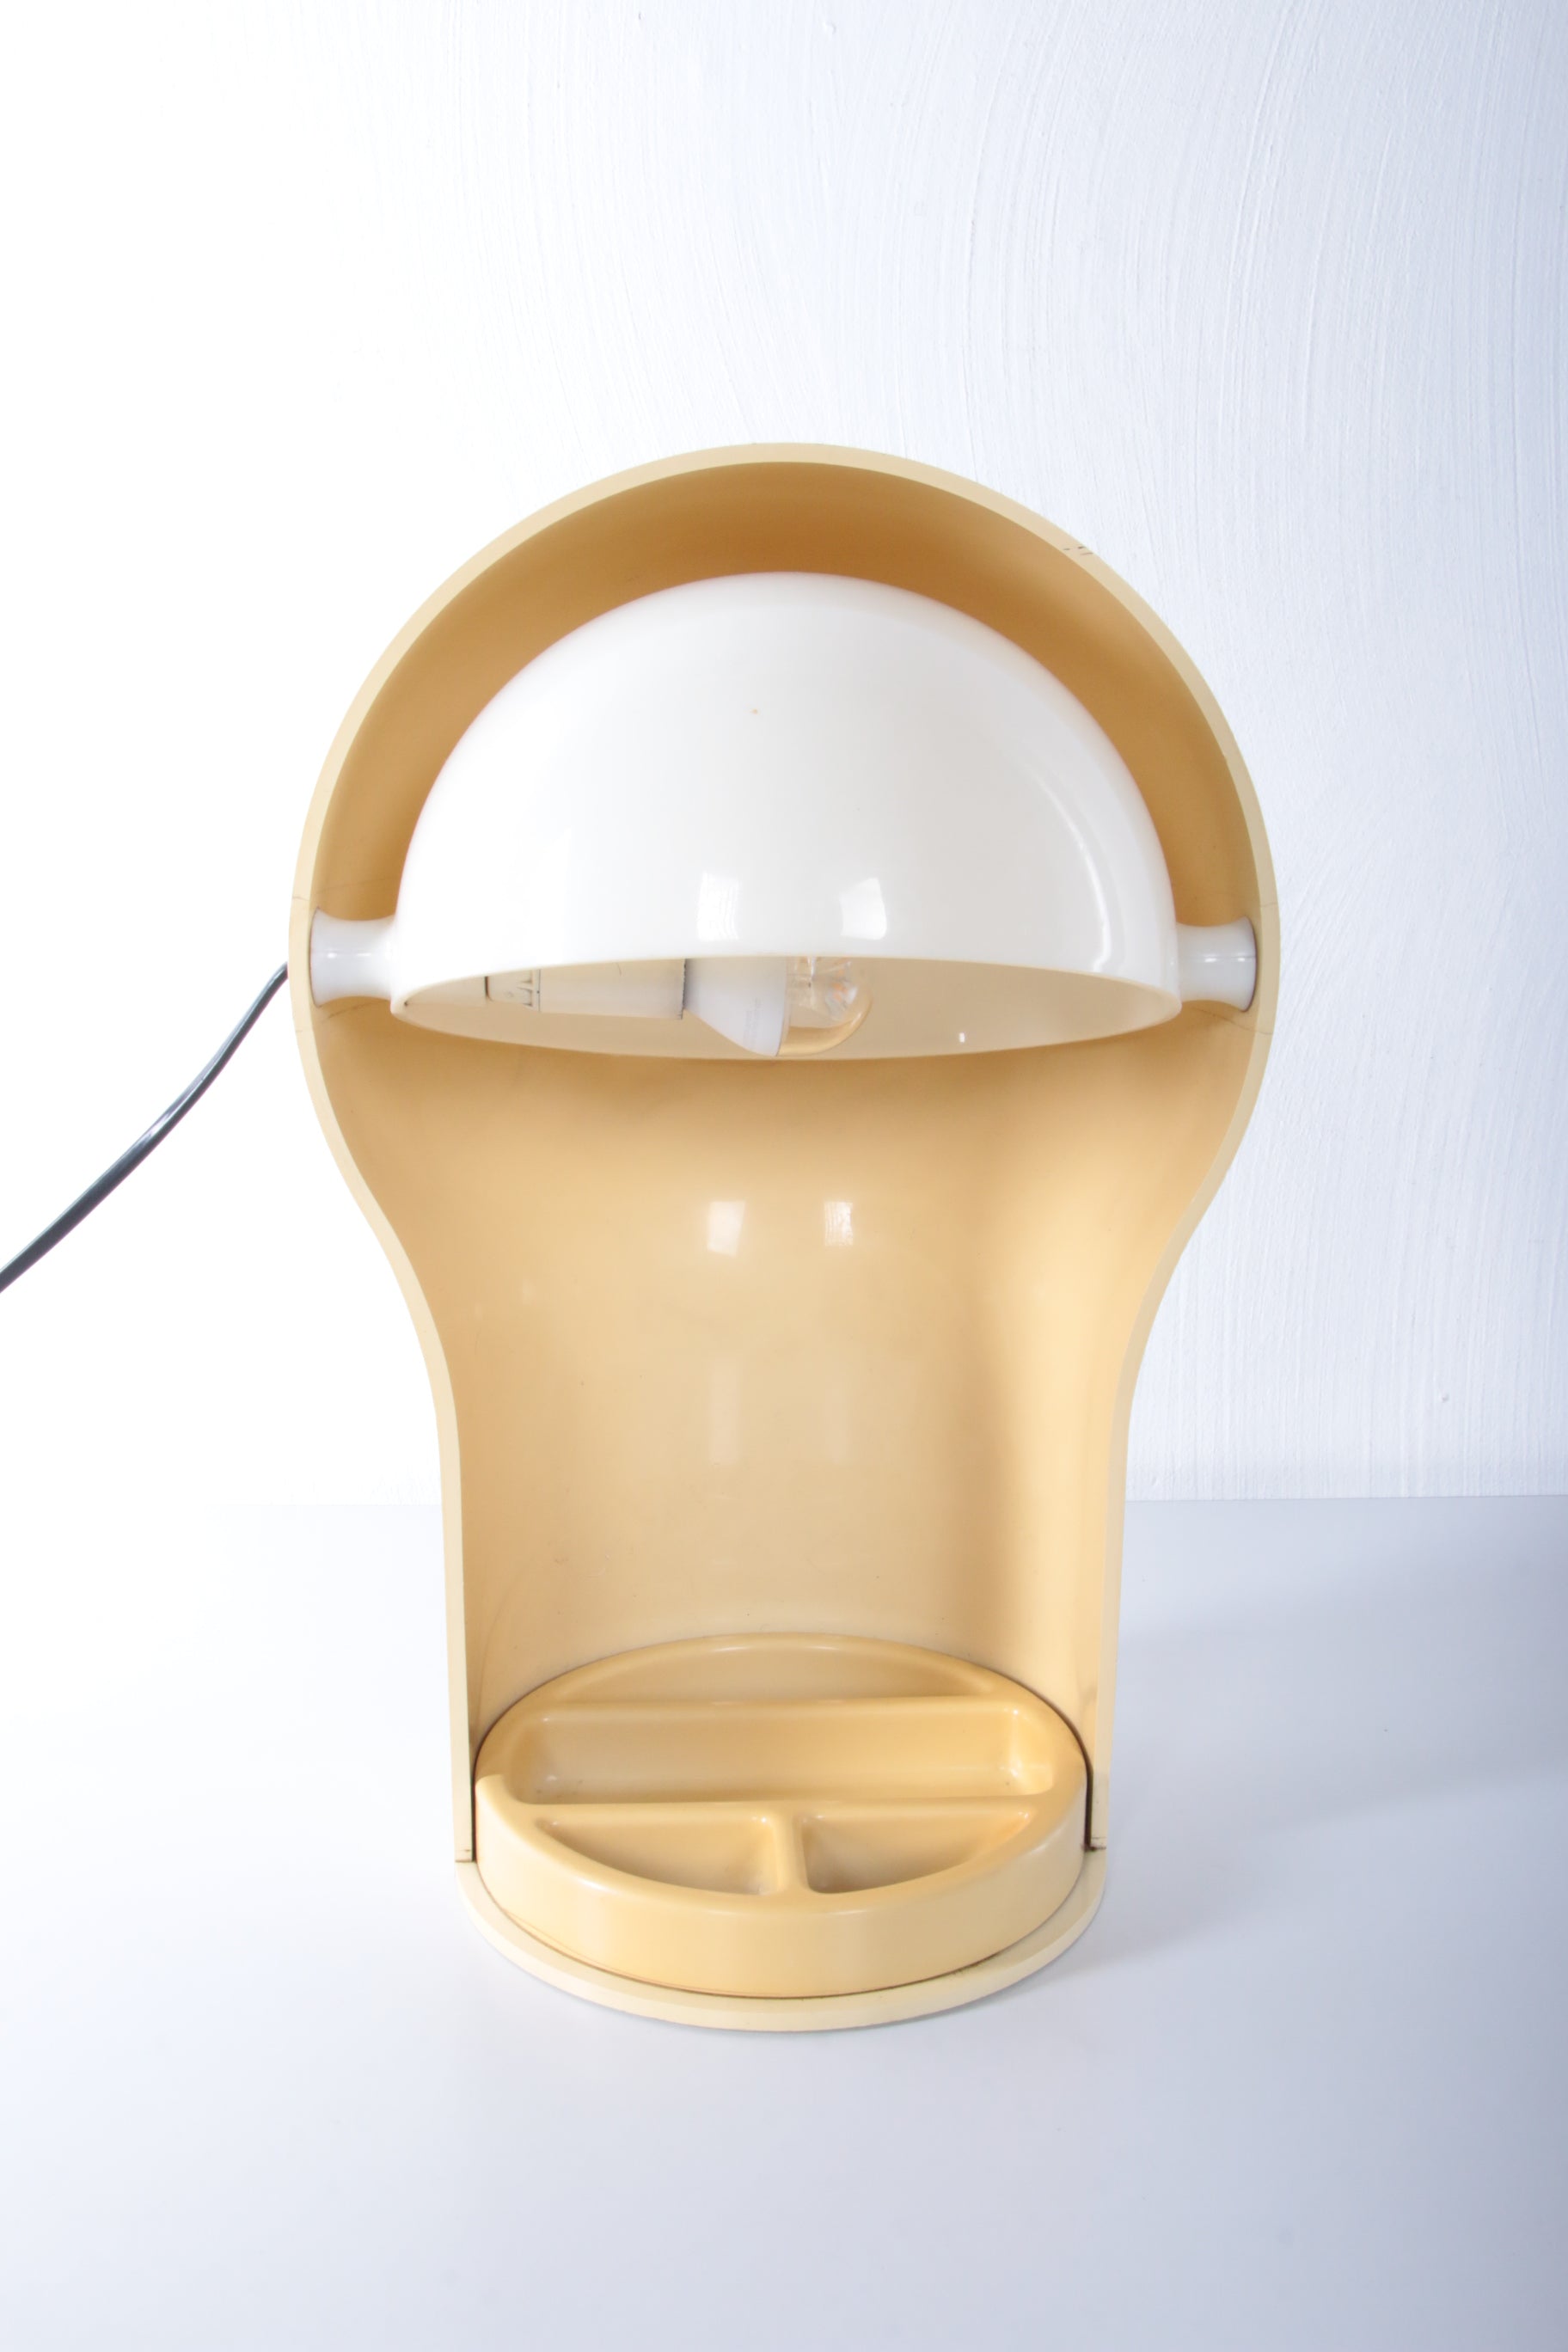 Vico Magistretti Desk lamp Model Telegono gemaakt door Artemide,1960s Italie